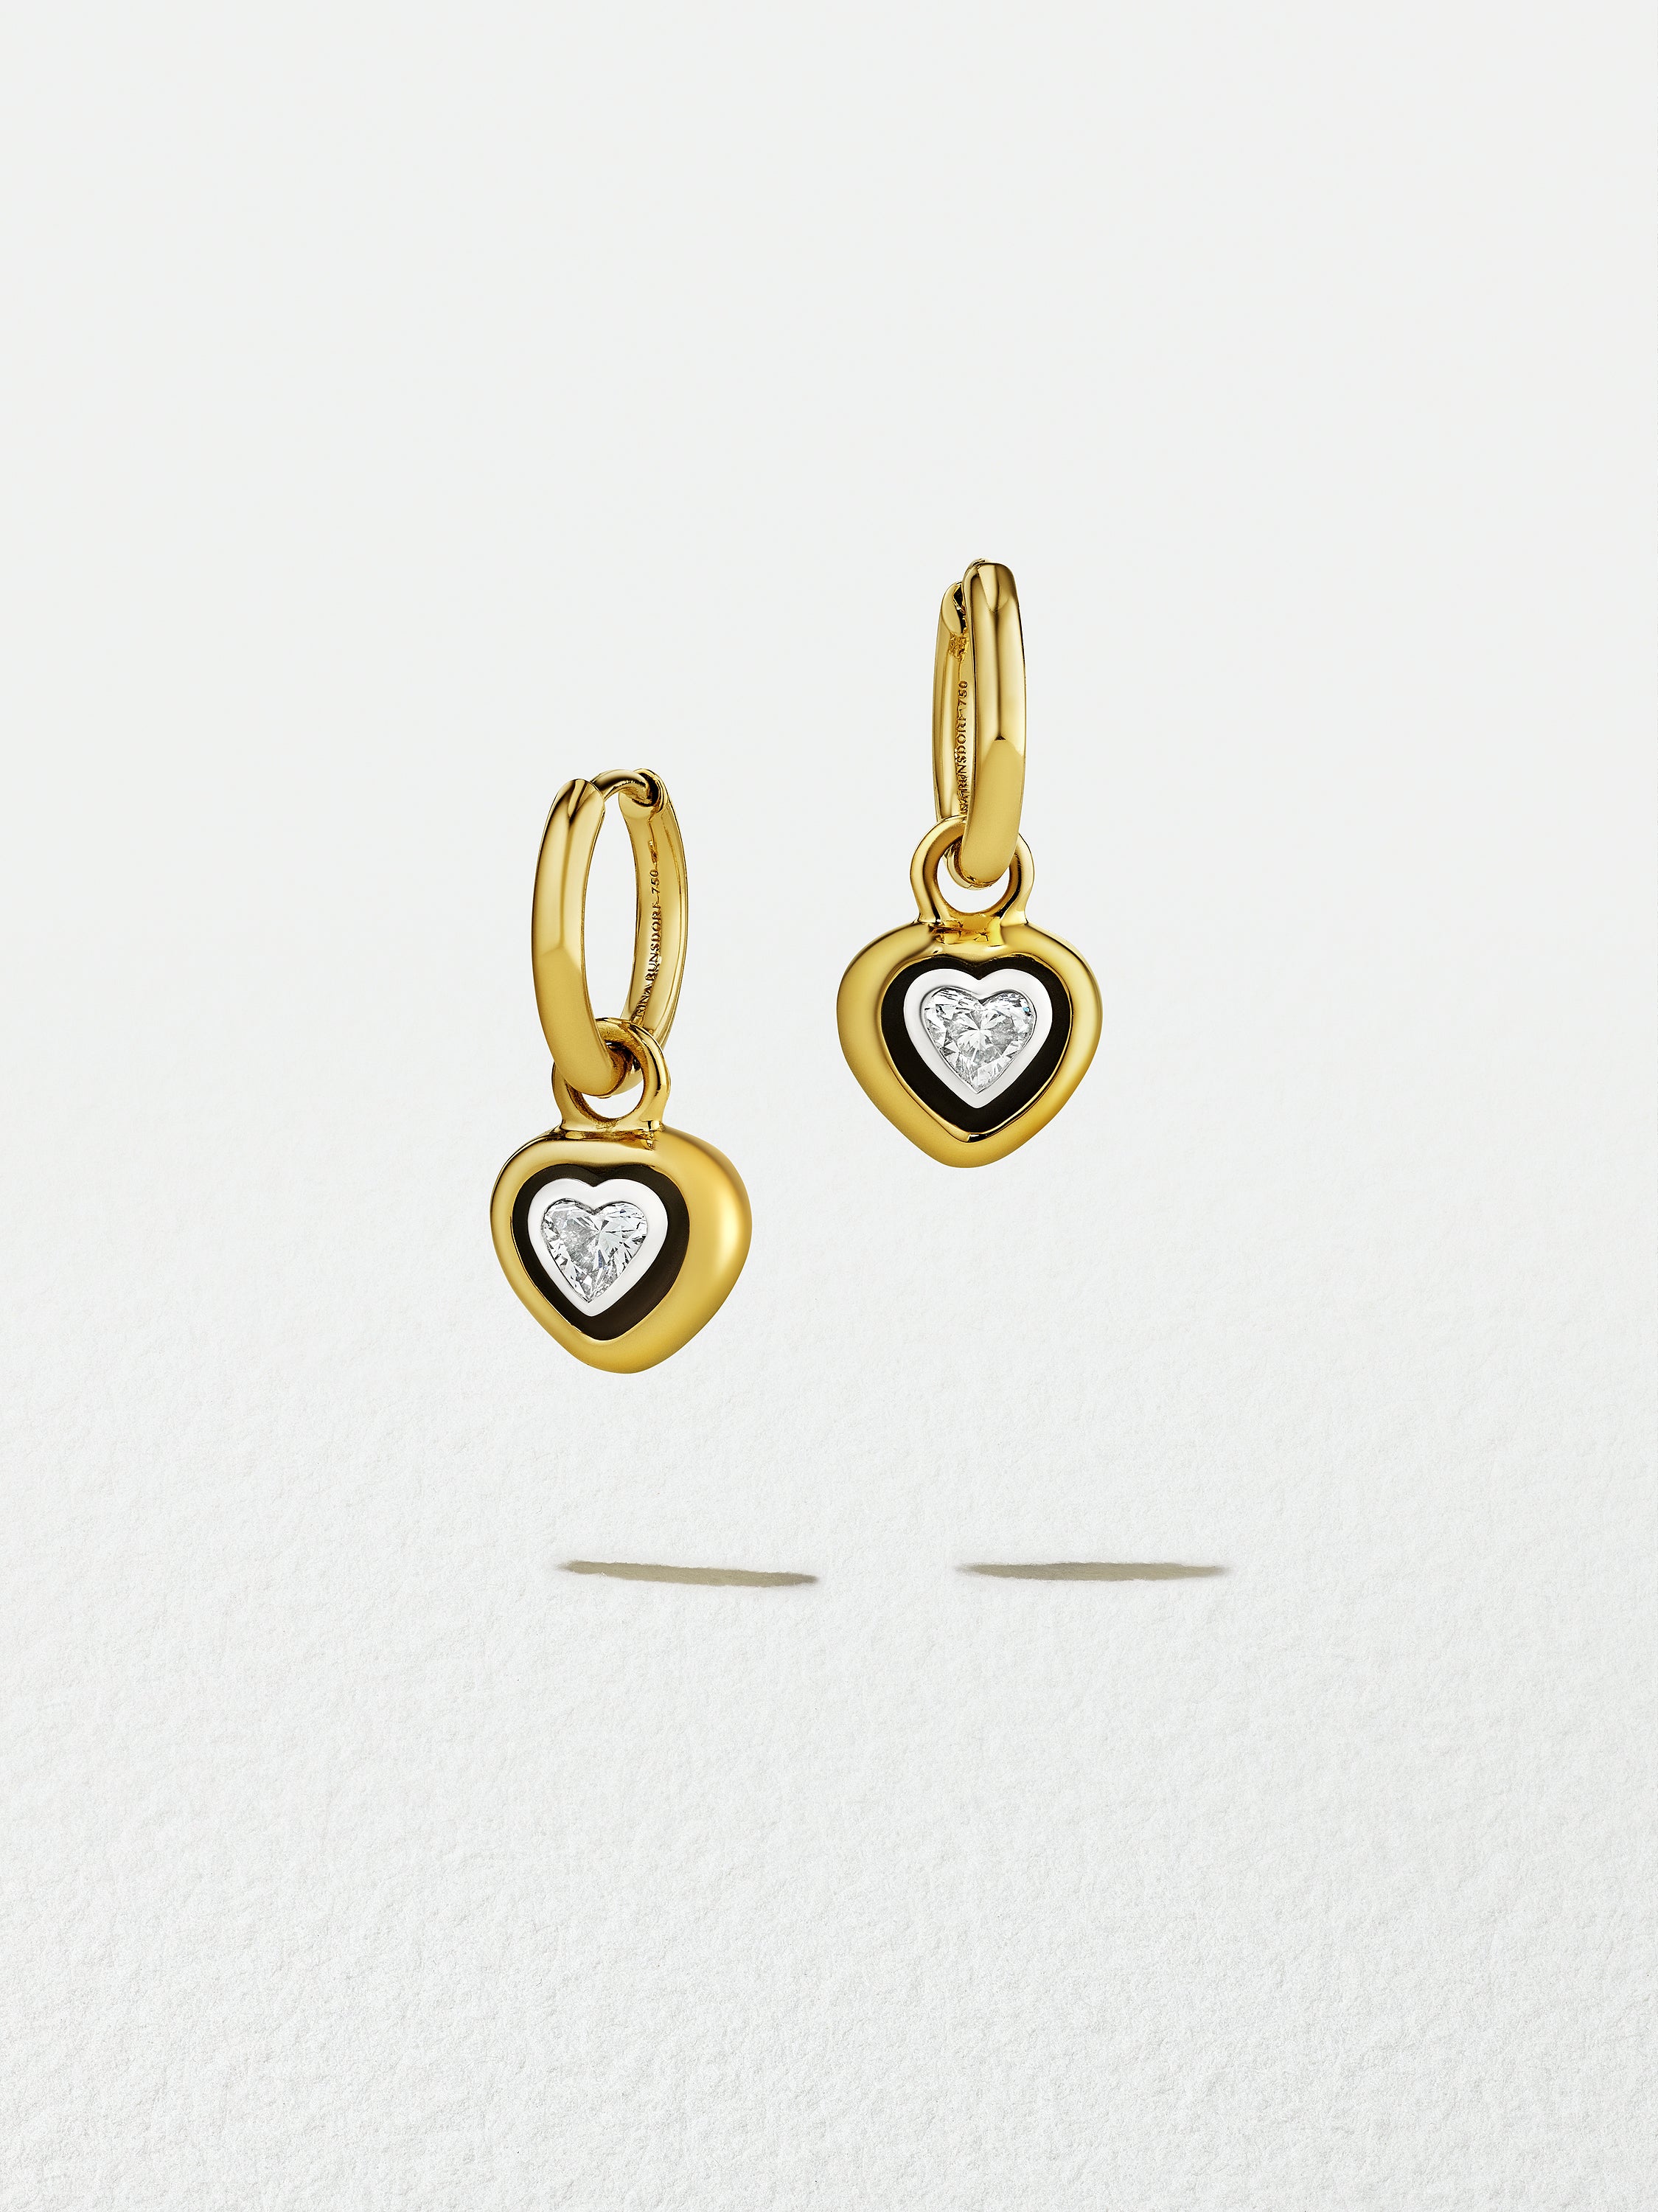 18K Yellow Gold Hoop Earrings with Heartshape Diamond Charms